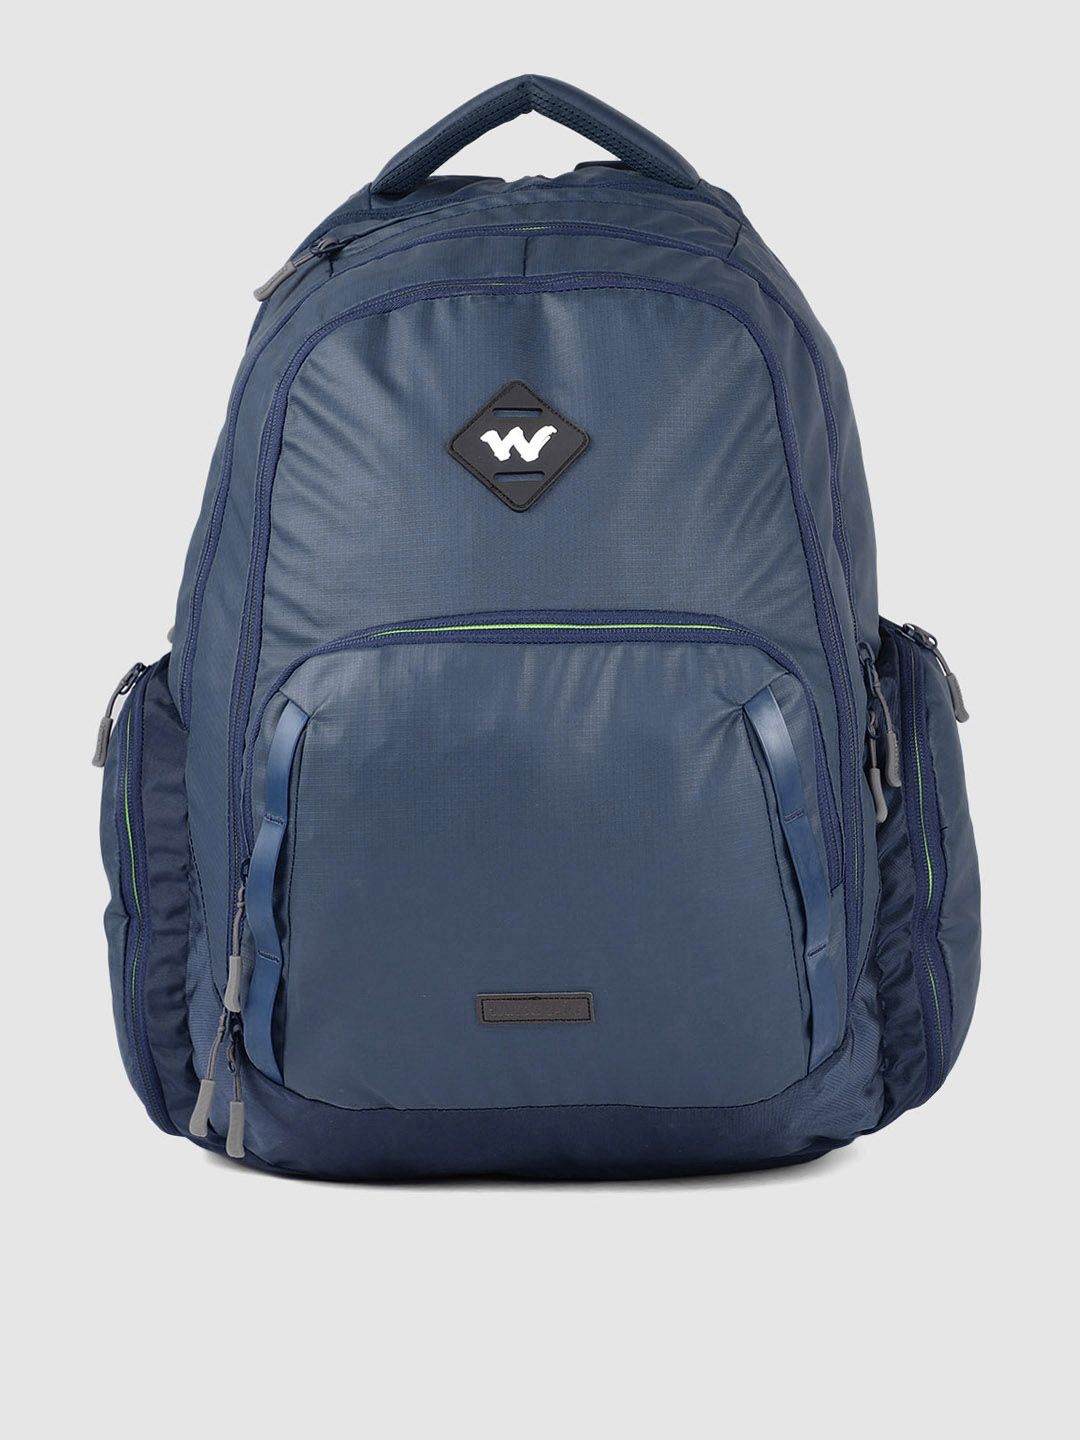 Wildcraft Unisex Blue Solid Imprint 2.0 Plus Backpack Price in India